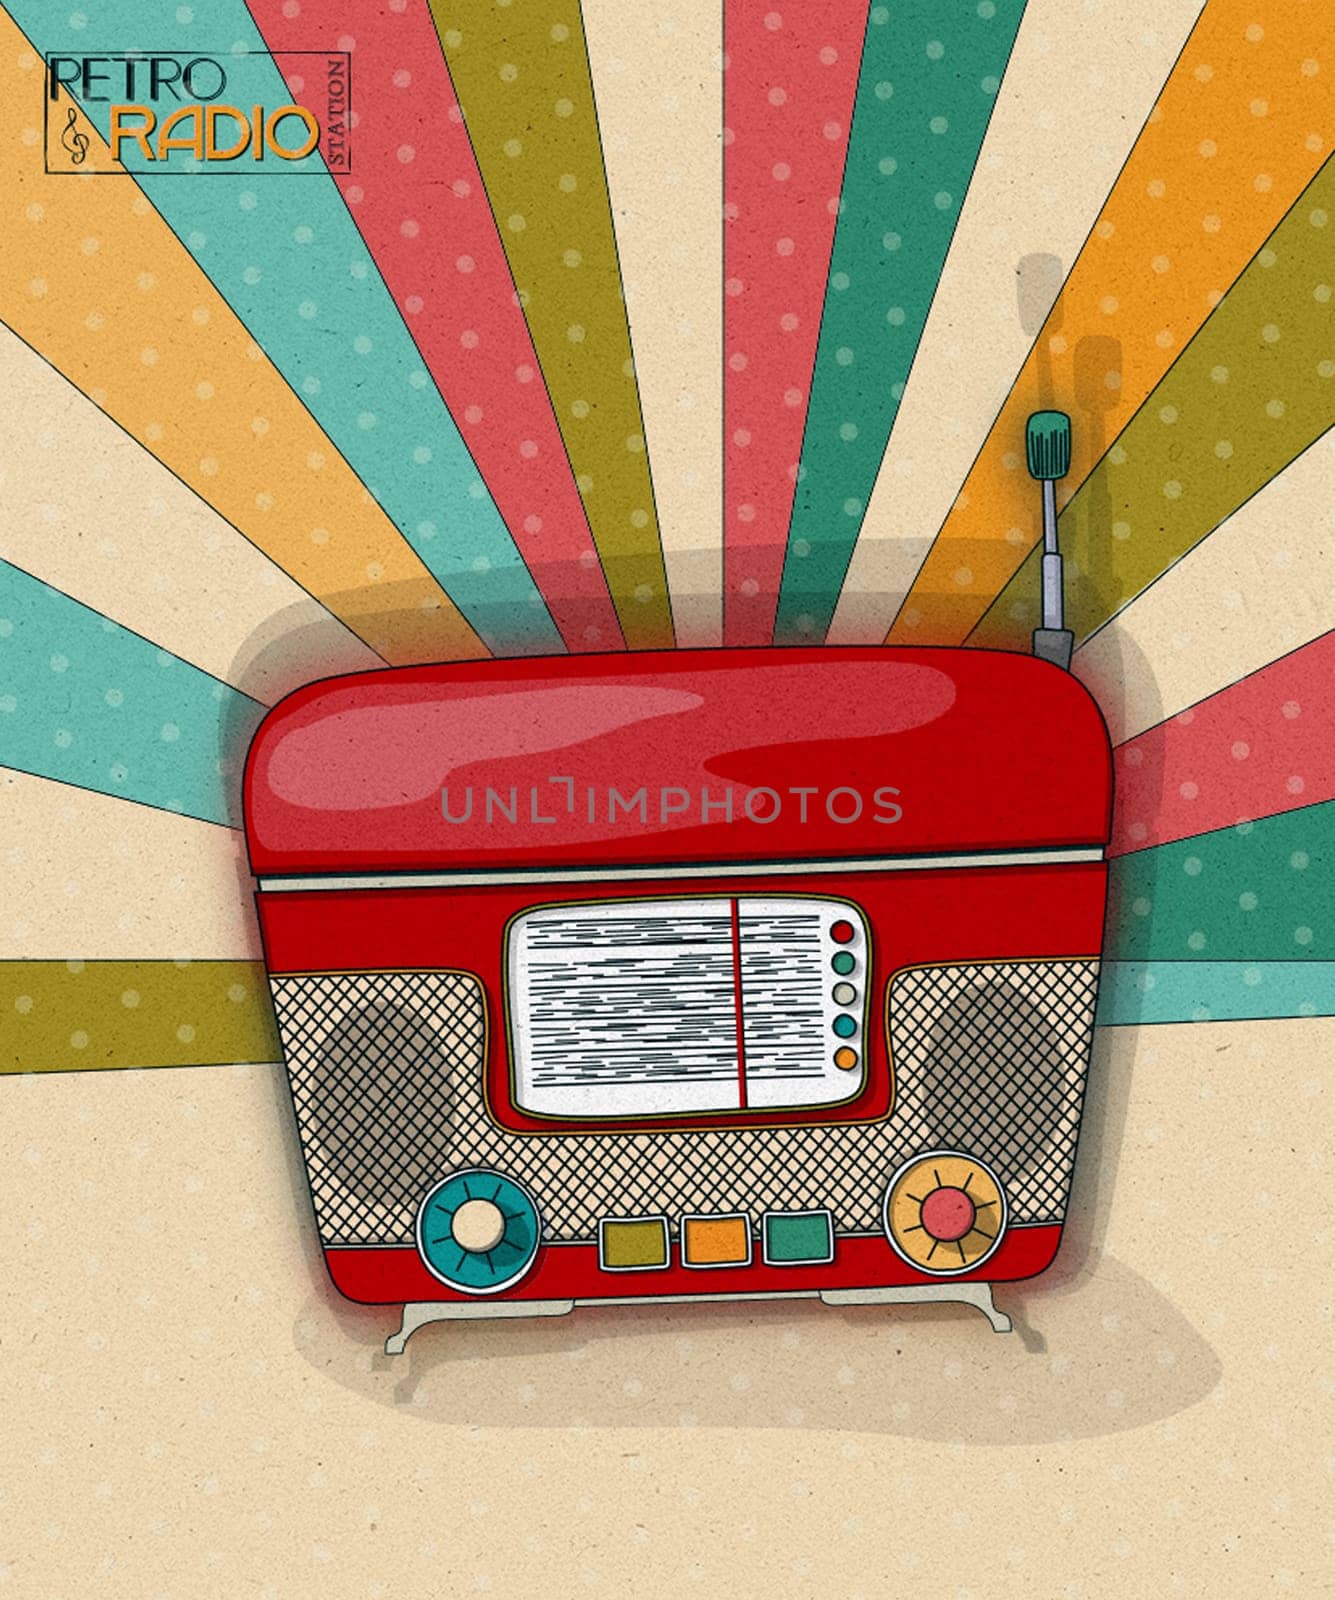 Vintage Radio background by Lirch